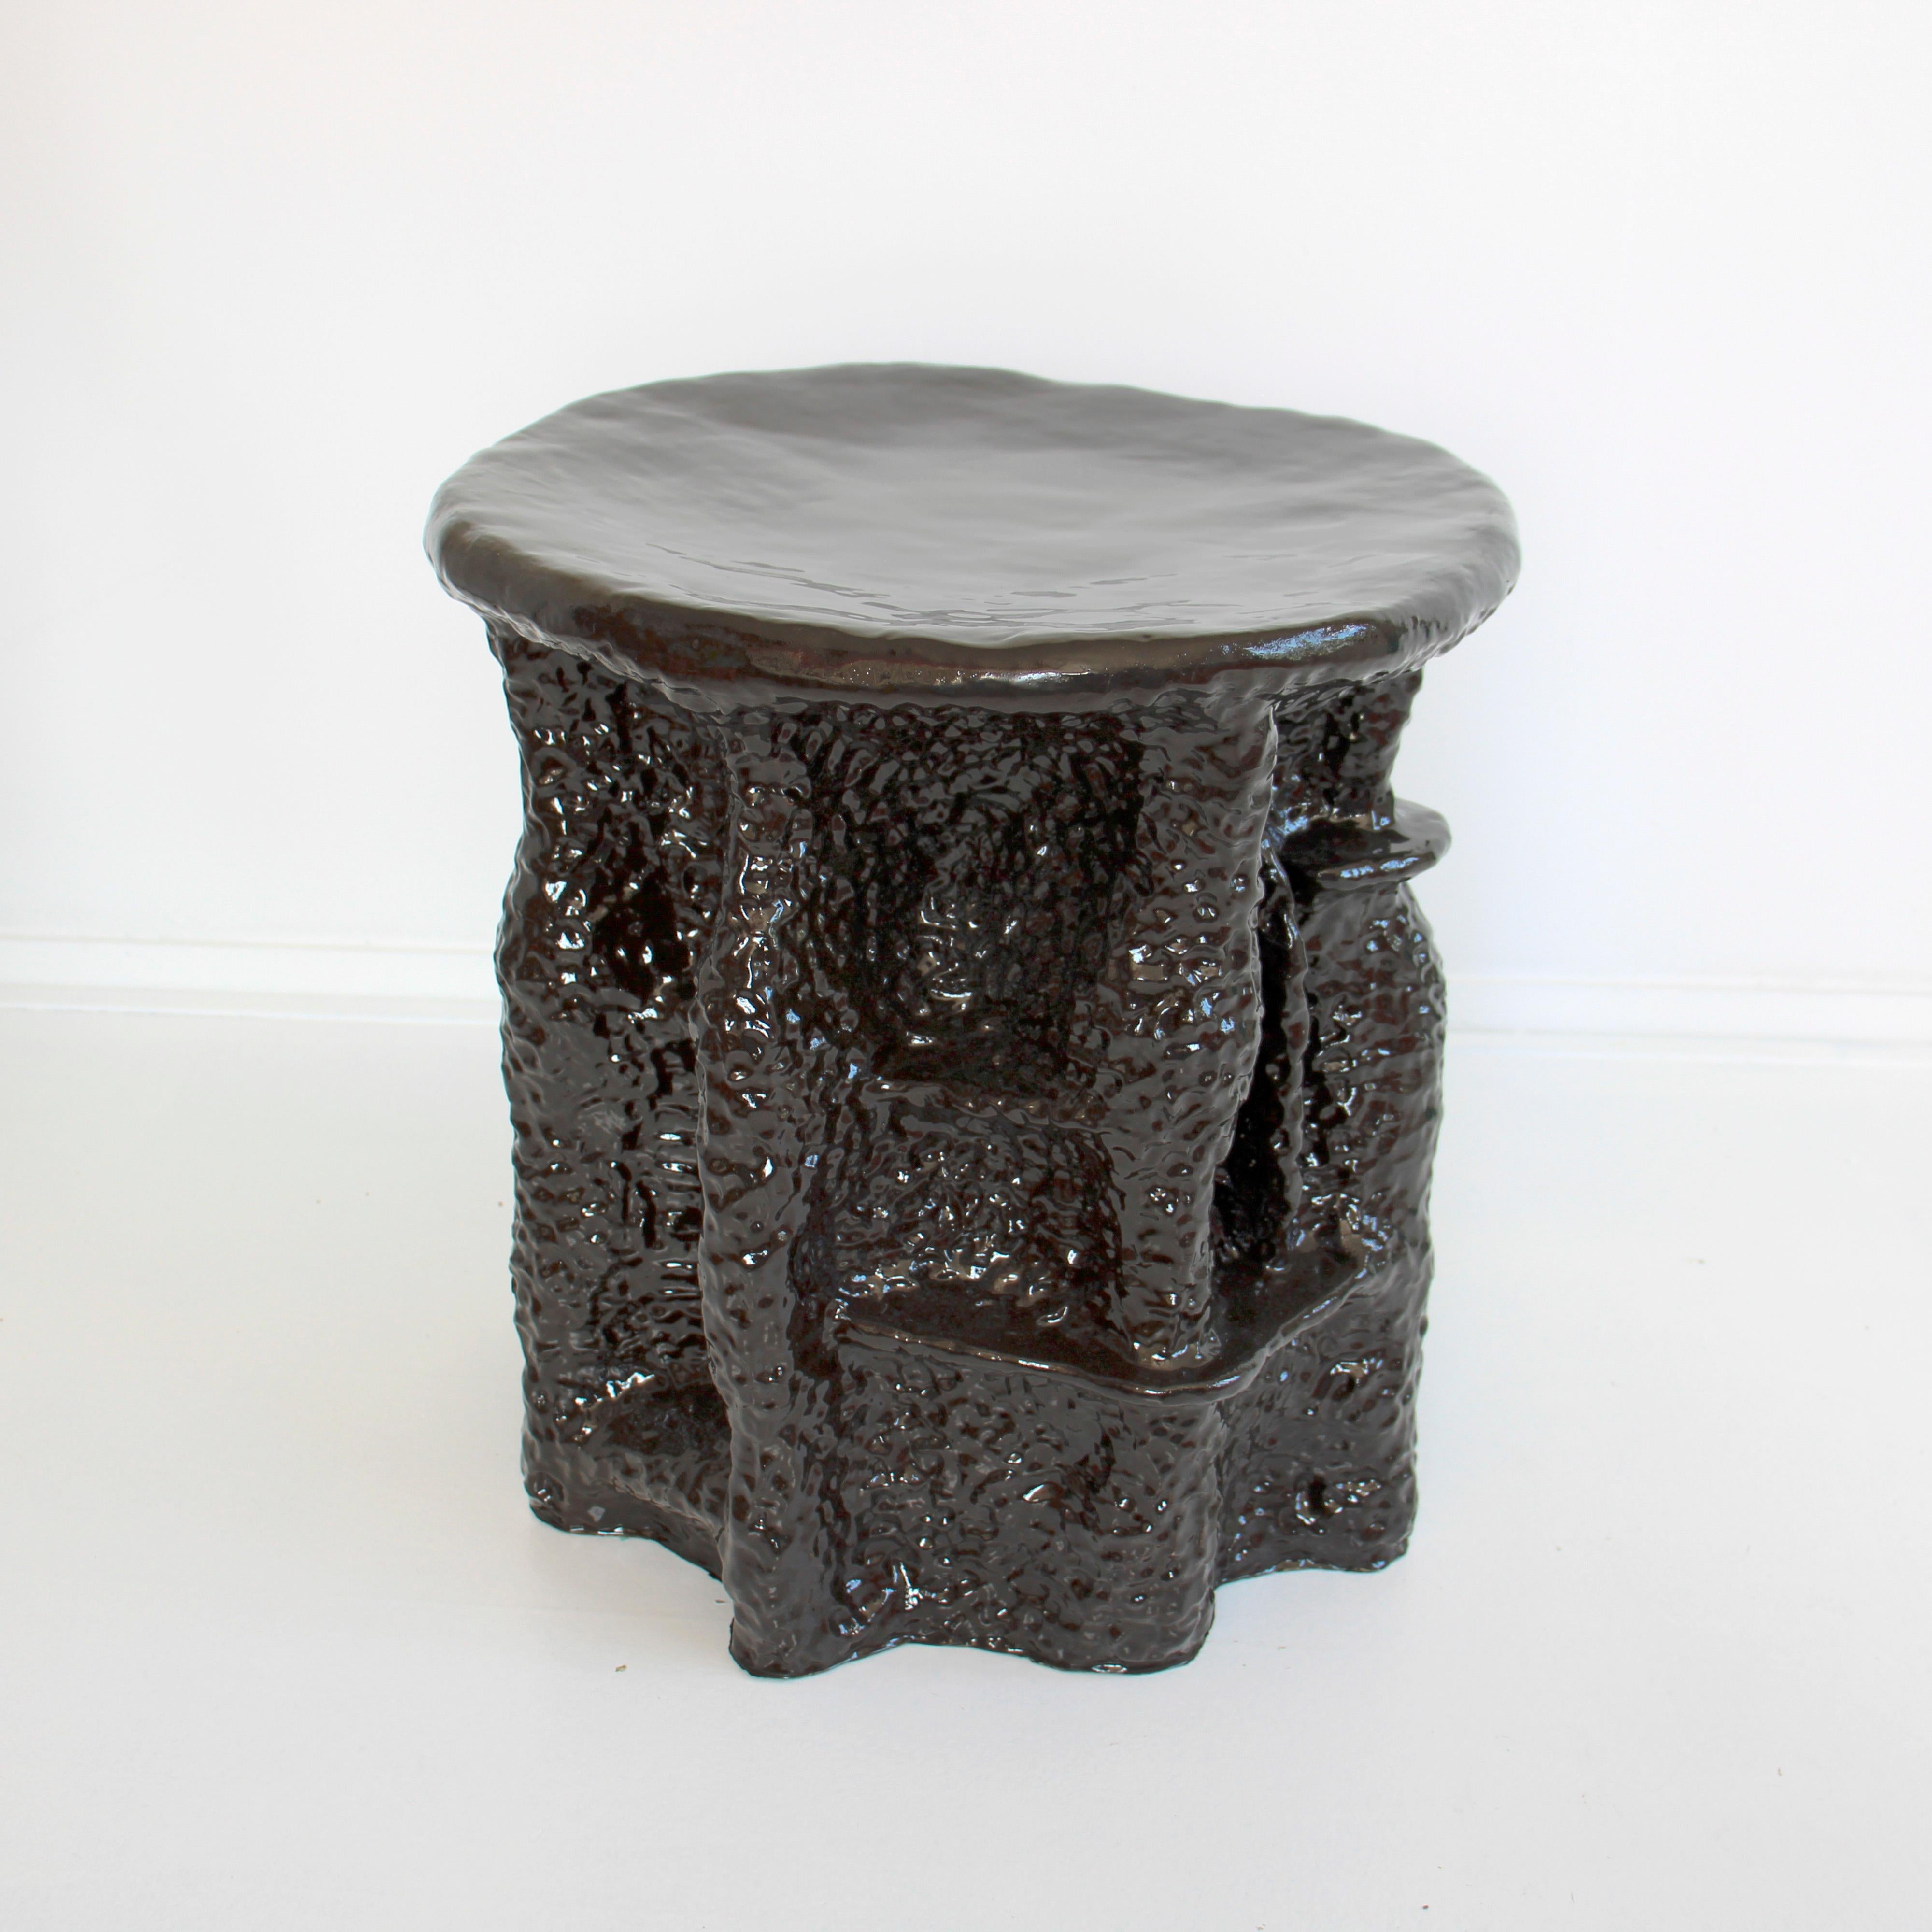 Post-Modern Contemporary Ceramic Furniture, Table, 2020, Rutger de Regt, the Netherlands